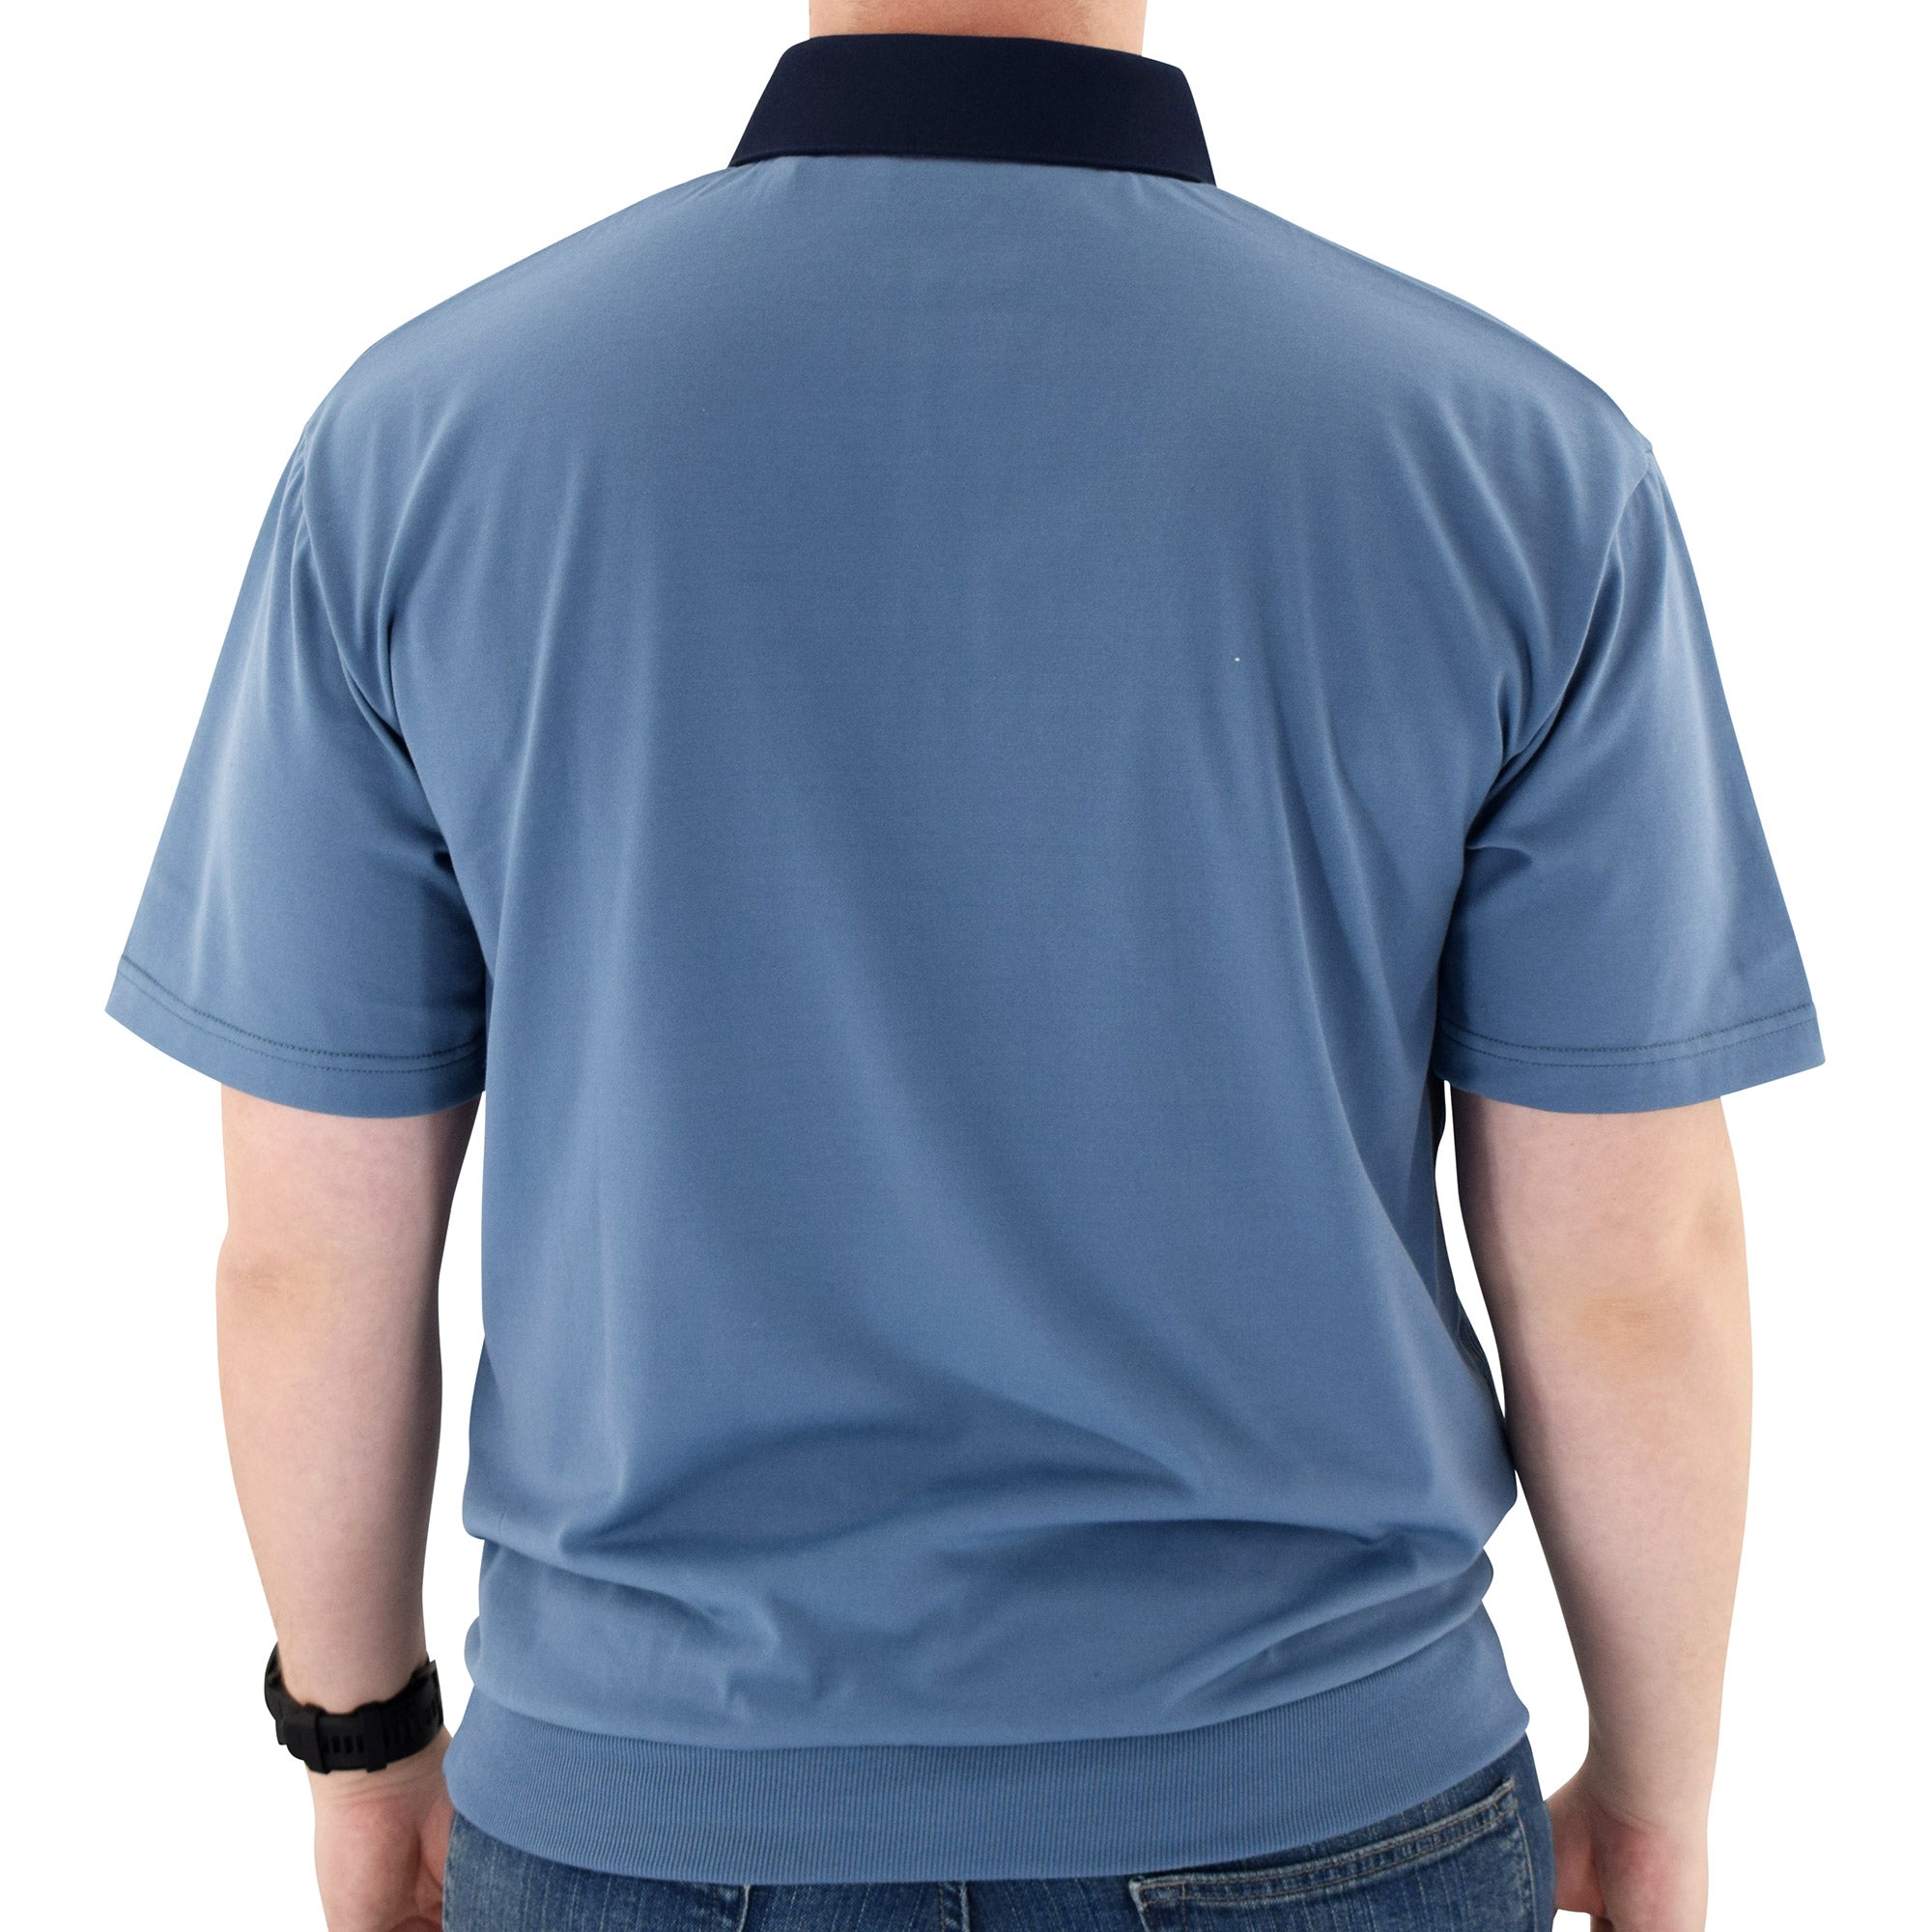 Classics by Palmland Horizontal Short Sleeve Banded Bottom Shirt Big and Tall Marine 6010-BL12 - theflagshirt